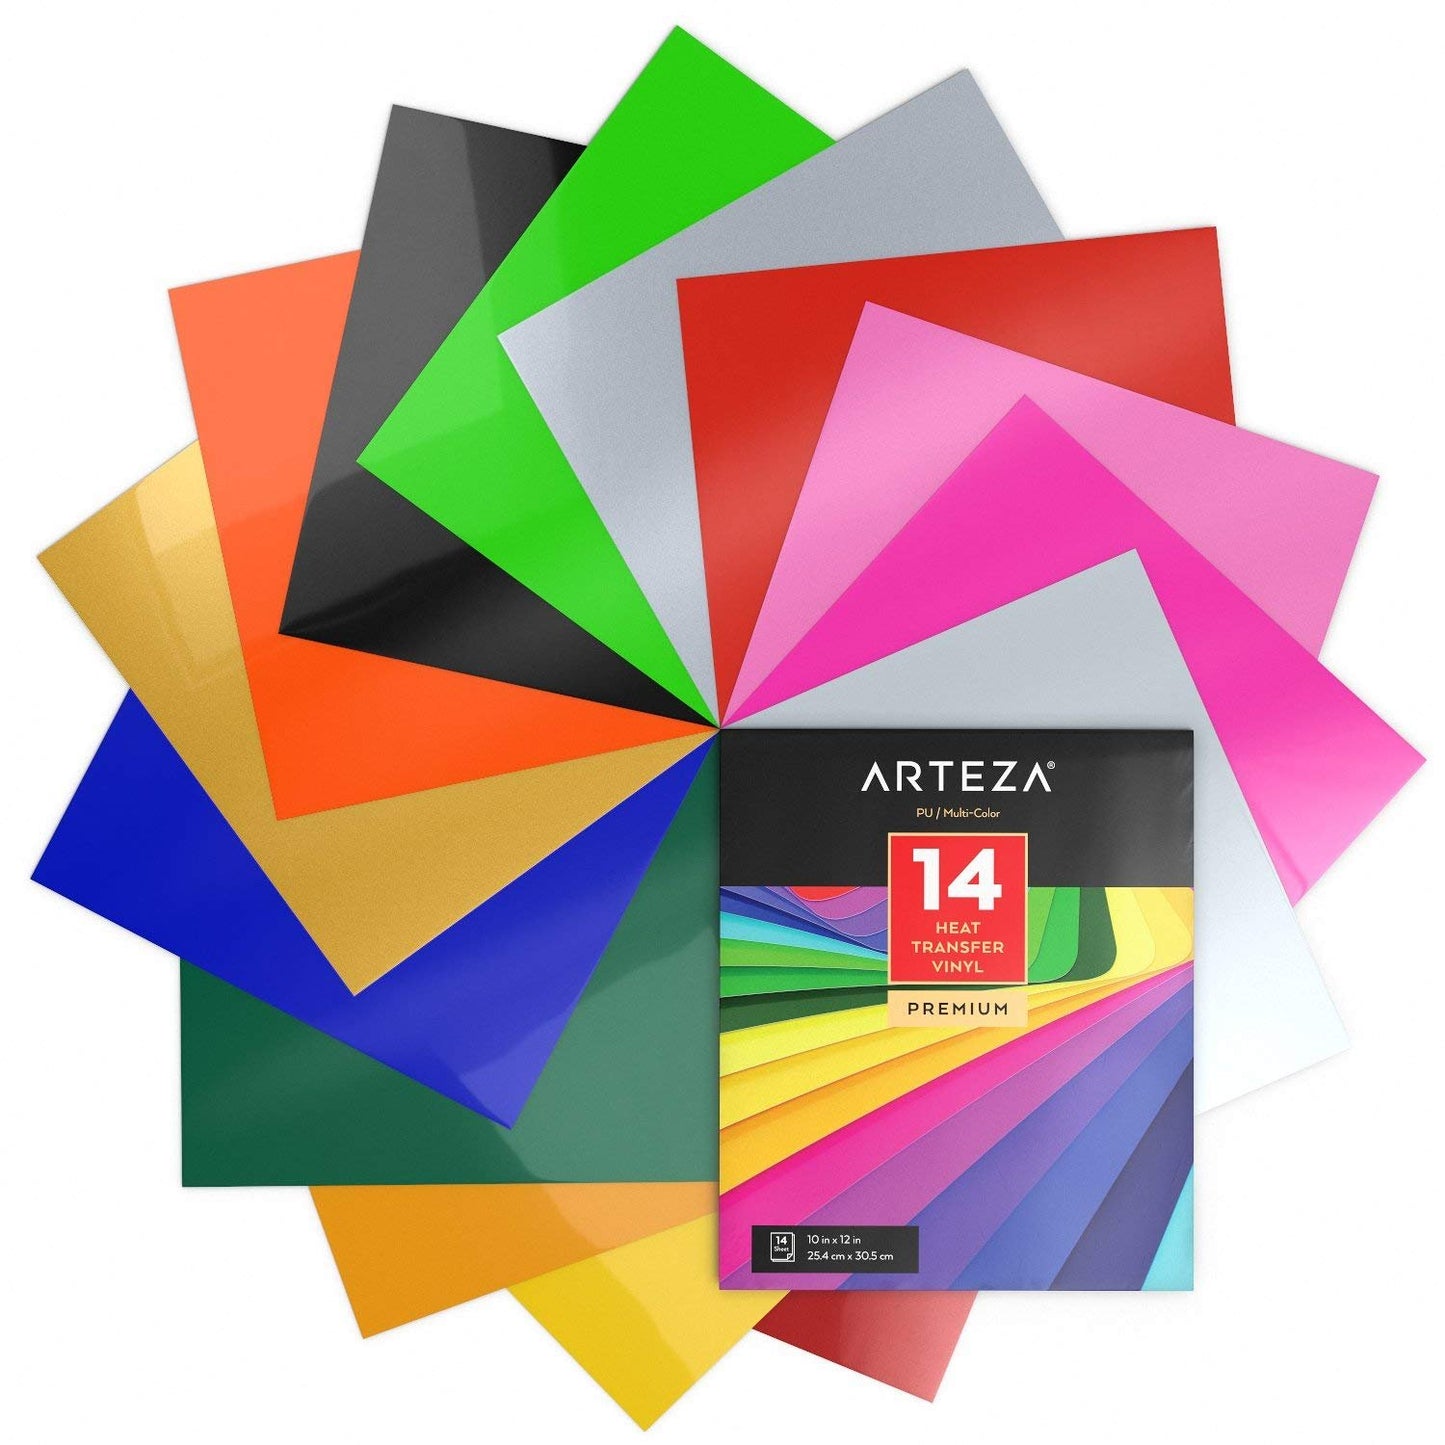 Arteza Heat Transfer Vinyl, Assorted Colors, 10" x 12” Sheets - Pack of 14